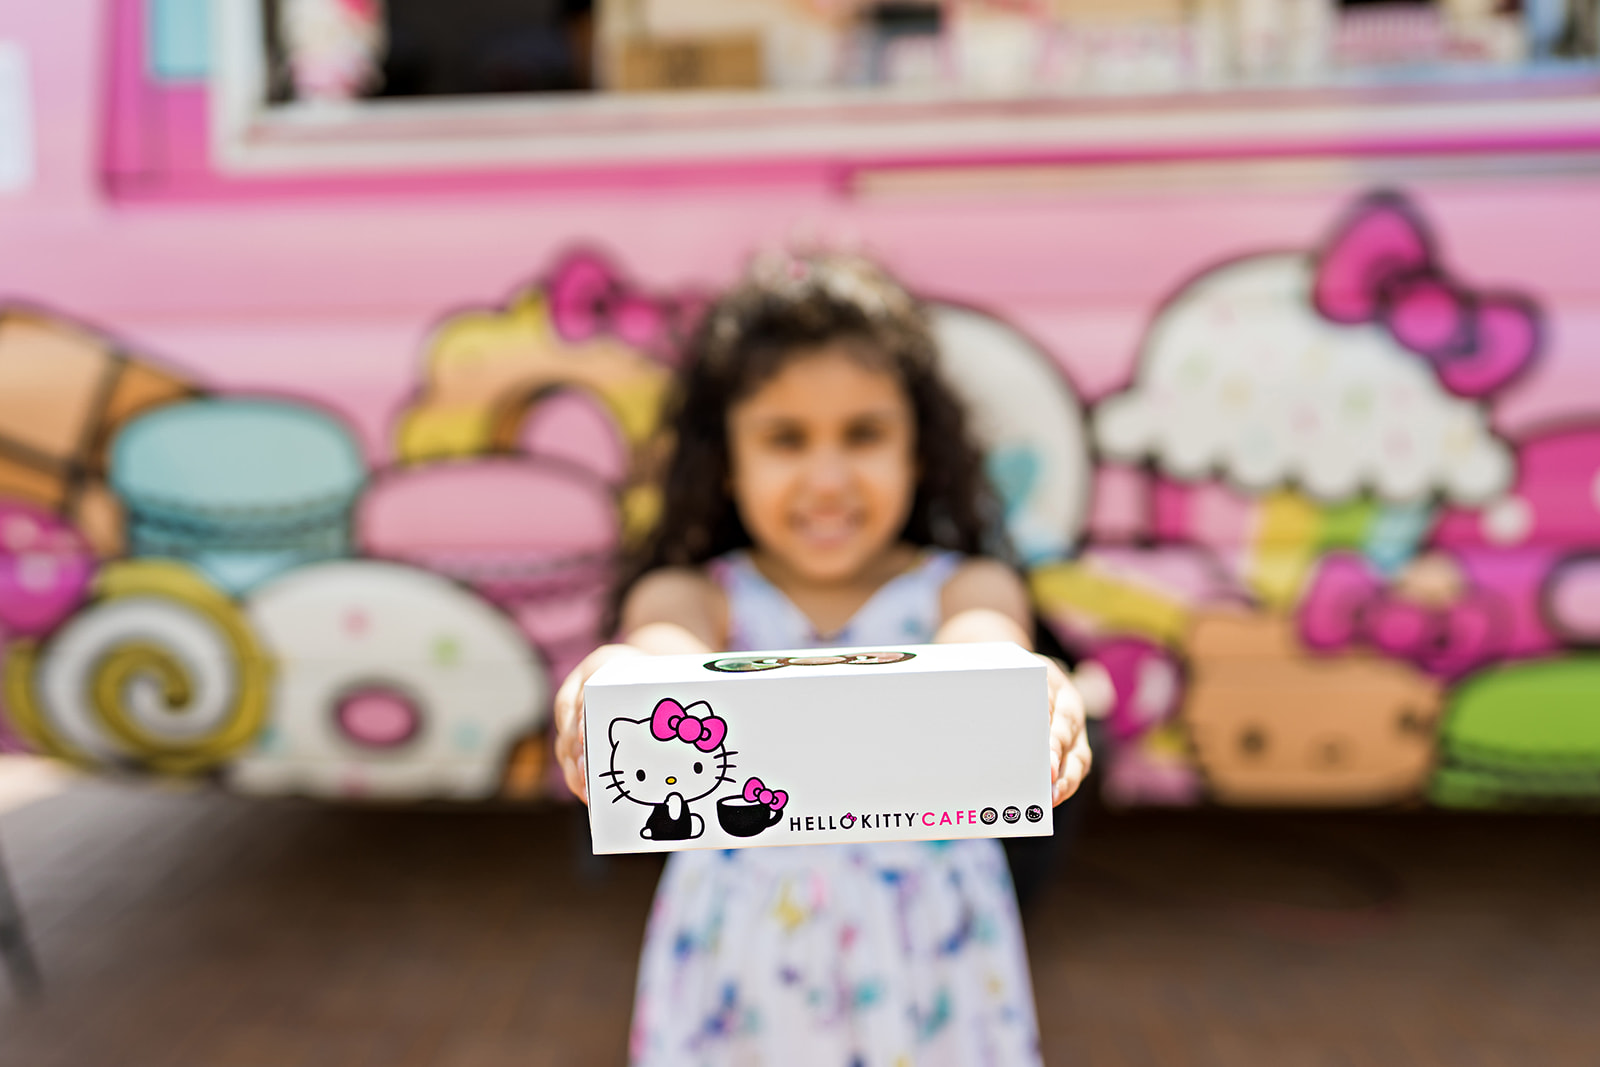 Hello Kitty Cafe Truck visting Chula Vista, Carlsbad and San Diego